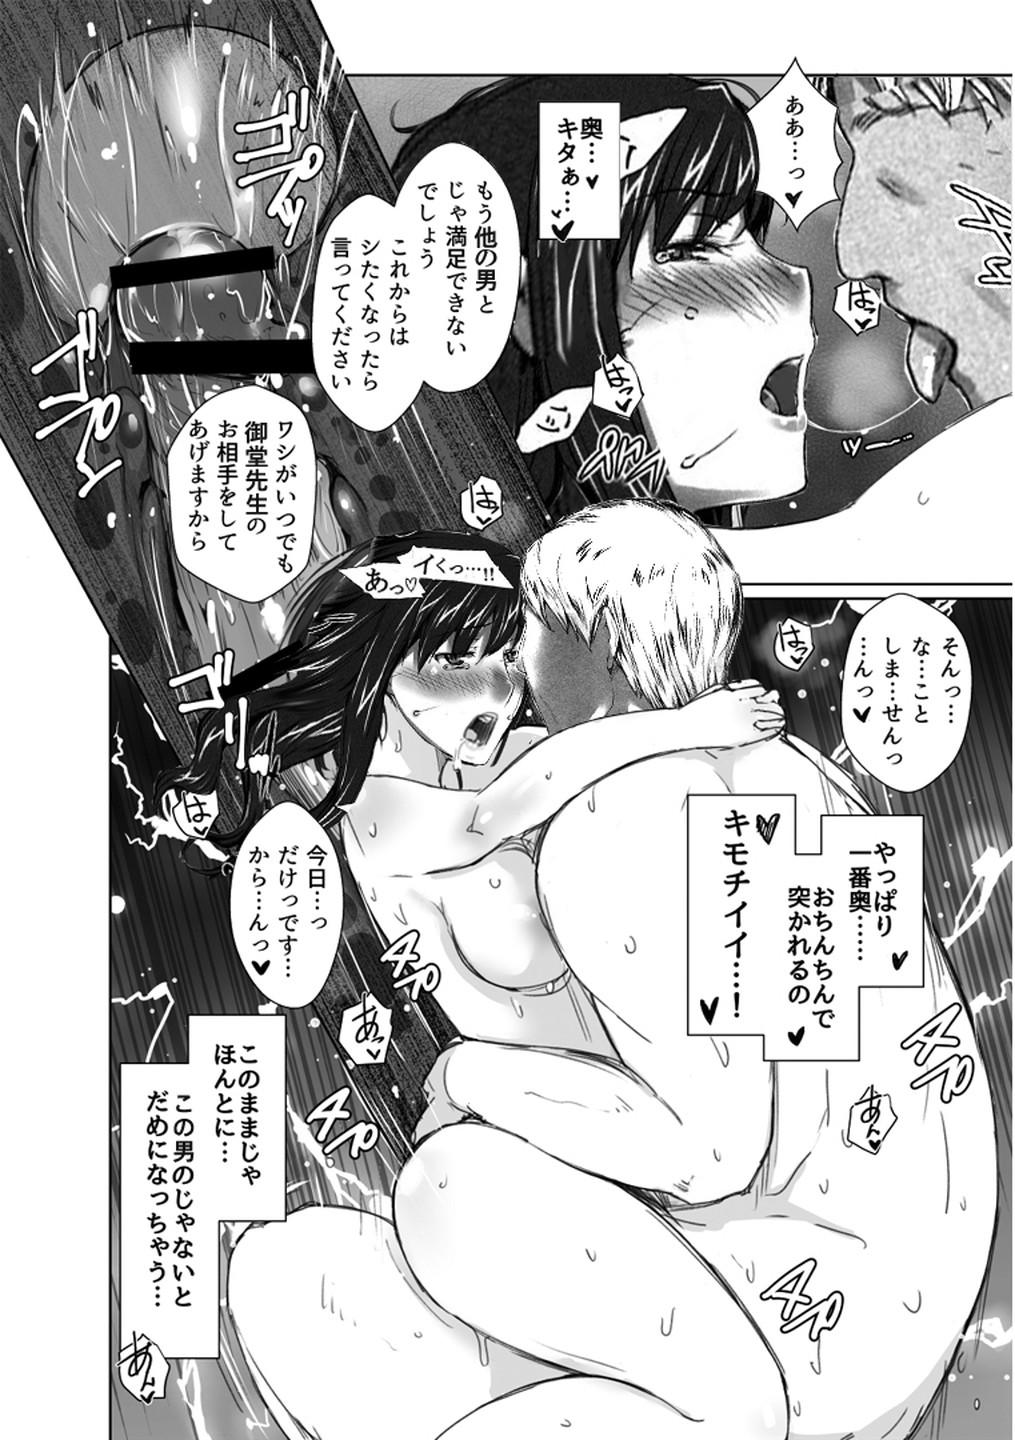 Sakiko-san in delusion Vol.1 Ver.1.1 ~Sakiko-san's circumstance at an educational training~ Stupid Sakiko (collage) on-going 31